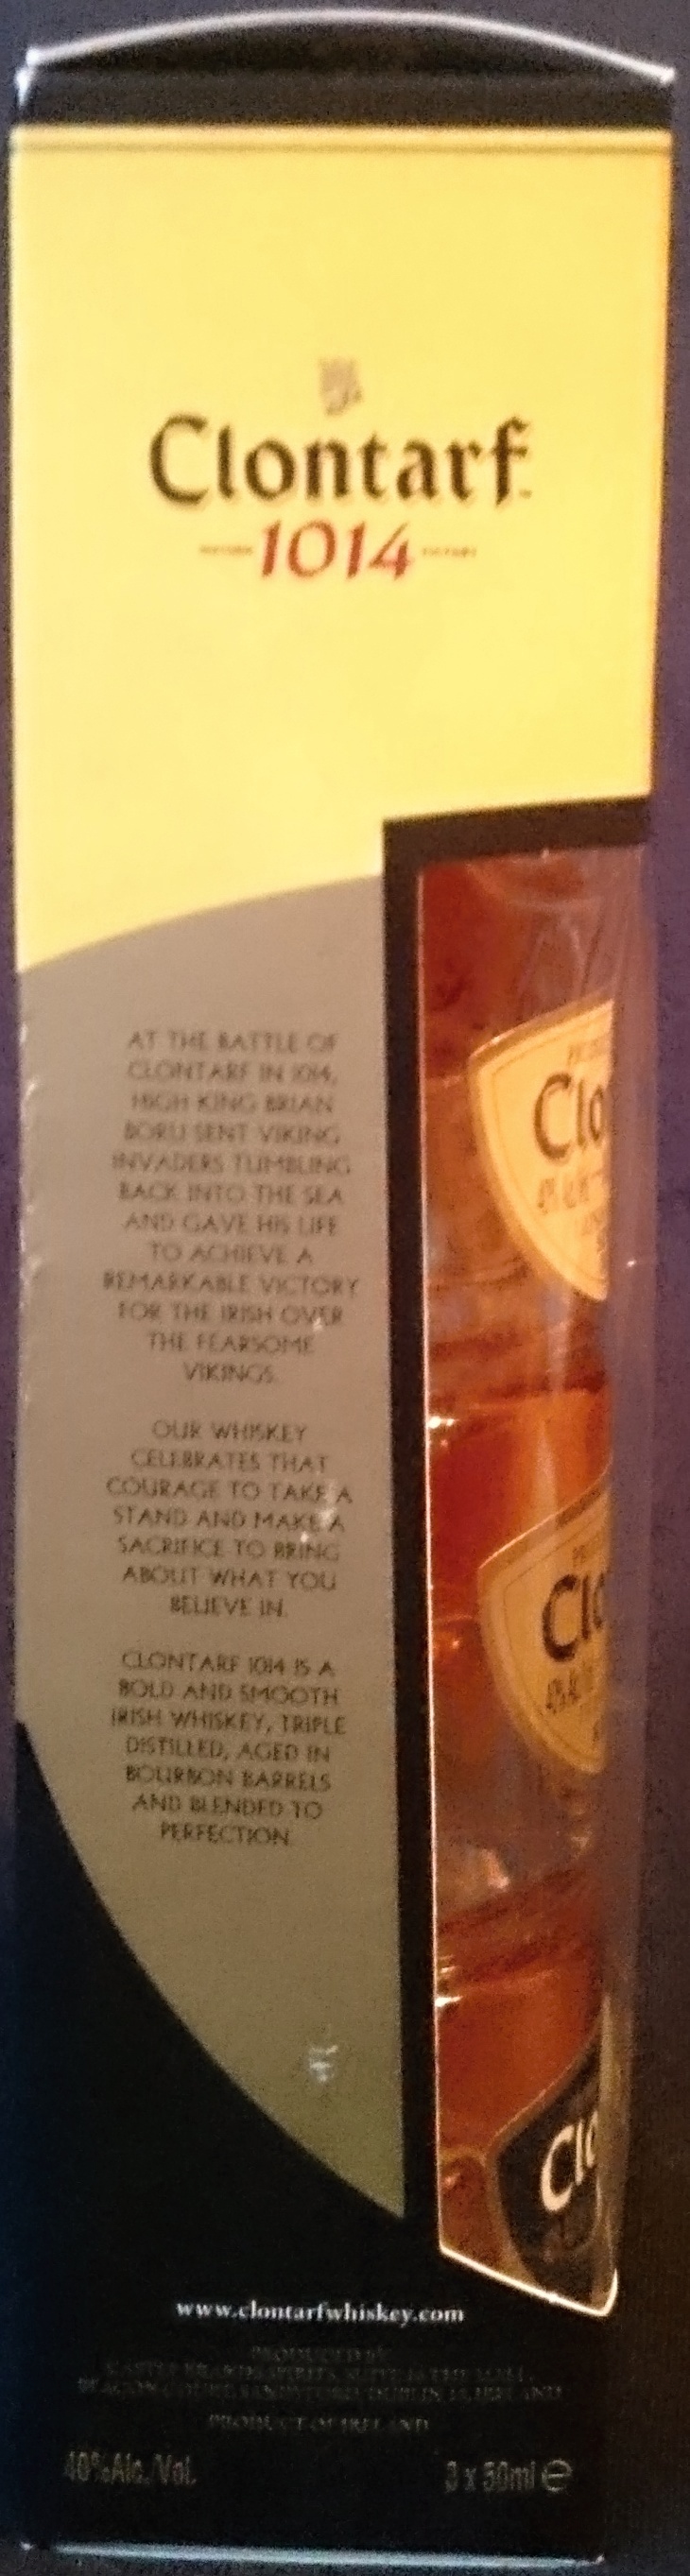 Clontarf
Product of Ireland
King Brian Boru
historic 1014 victory
Irish whiskey
Trinity
Single malt
Reserve
Classic blend
produced by Castle Brands Spirits, Dublin, Ireland
40%